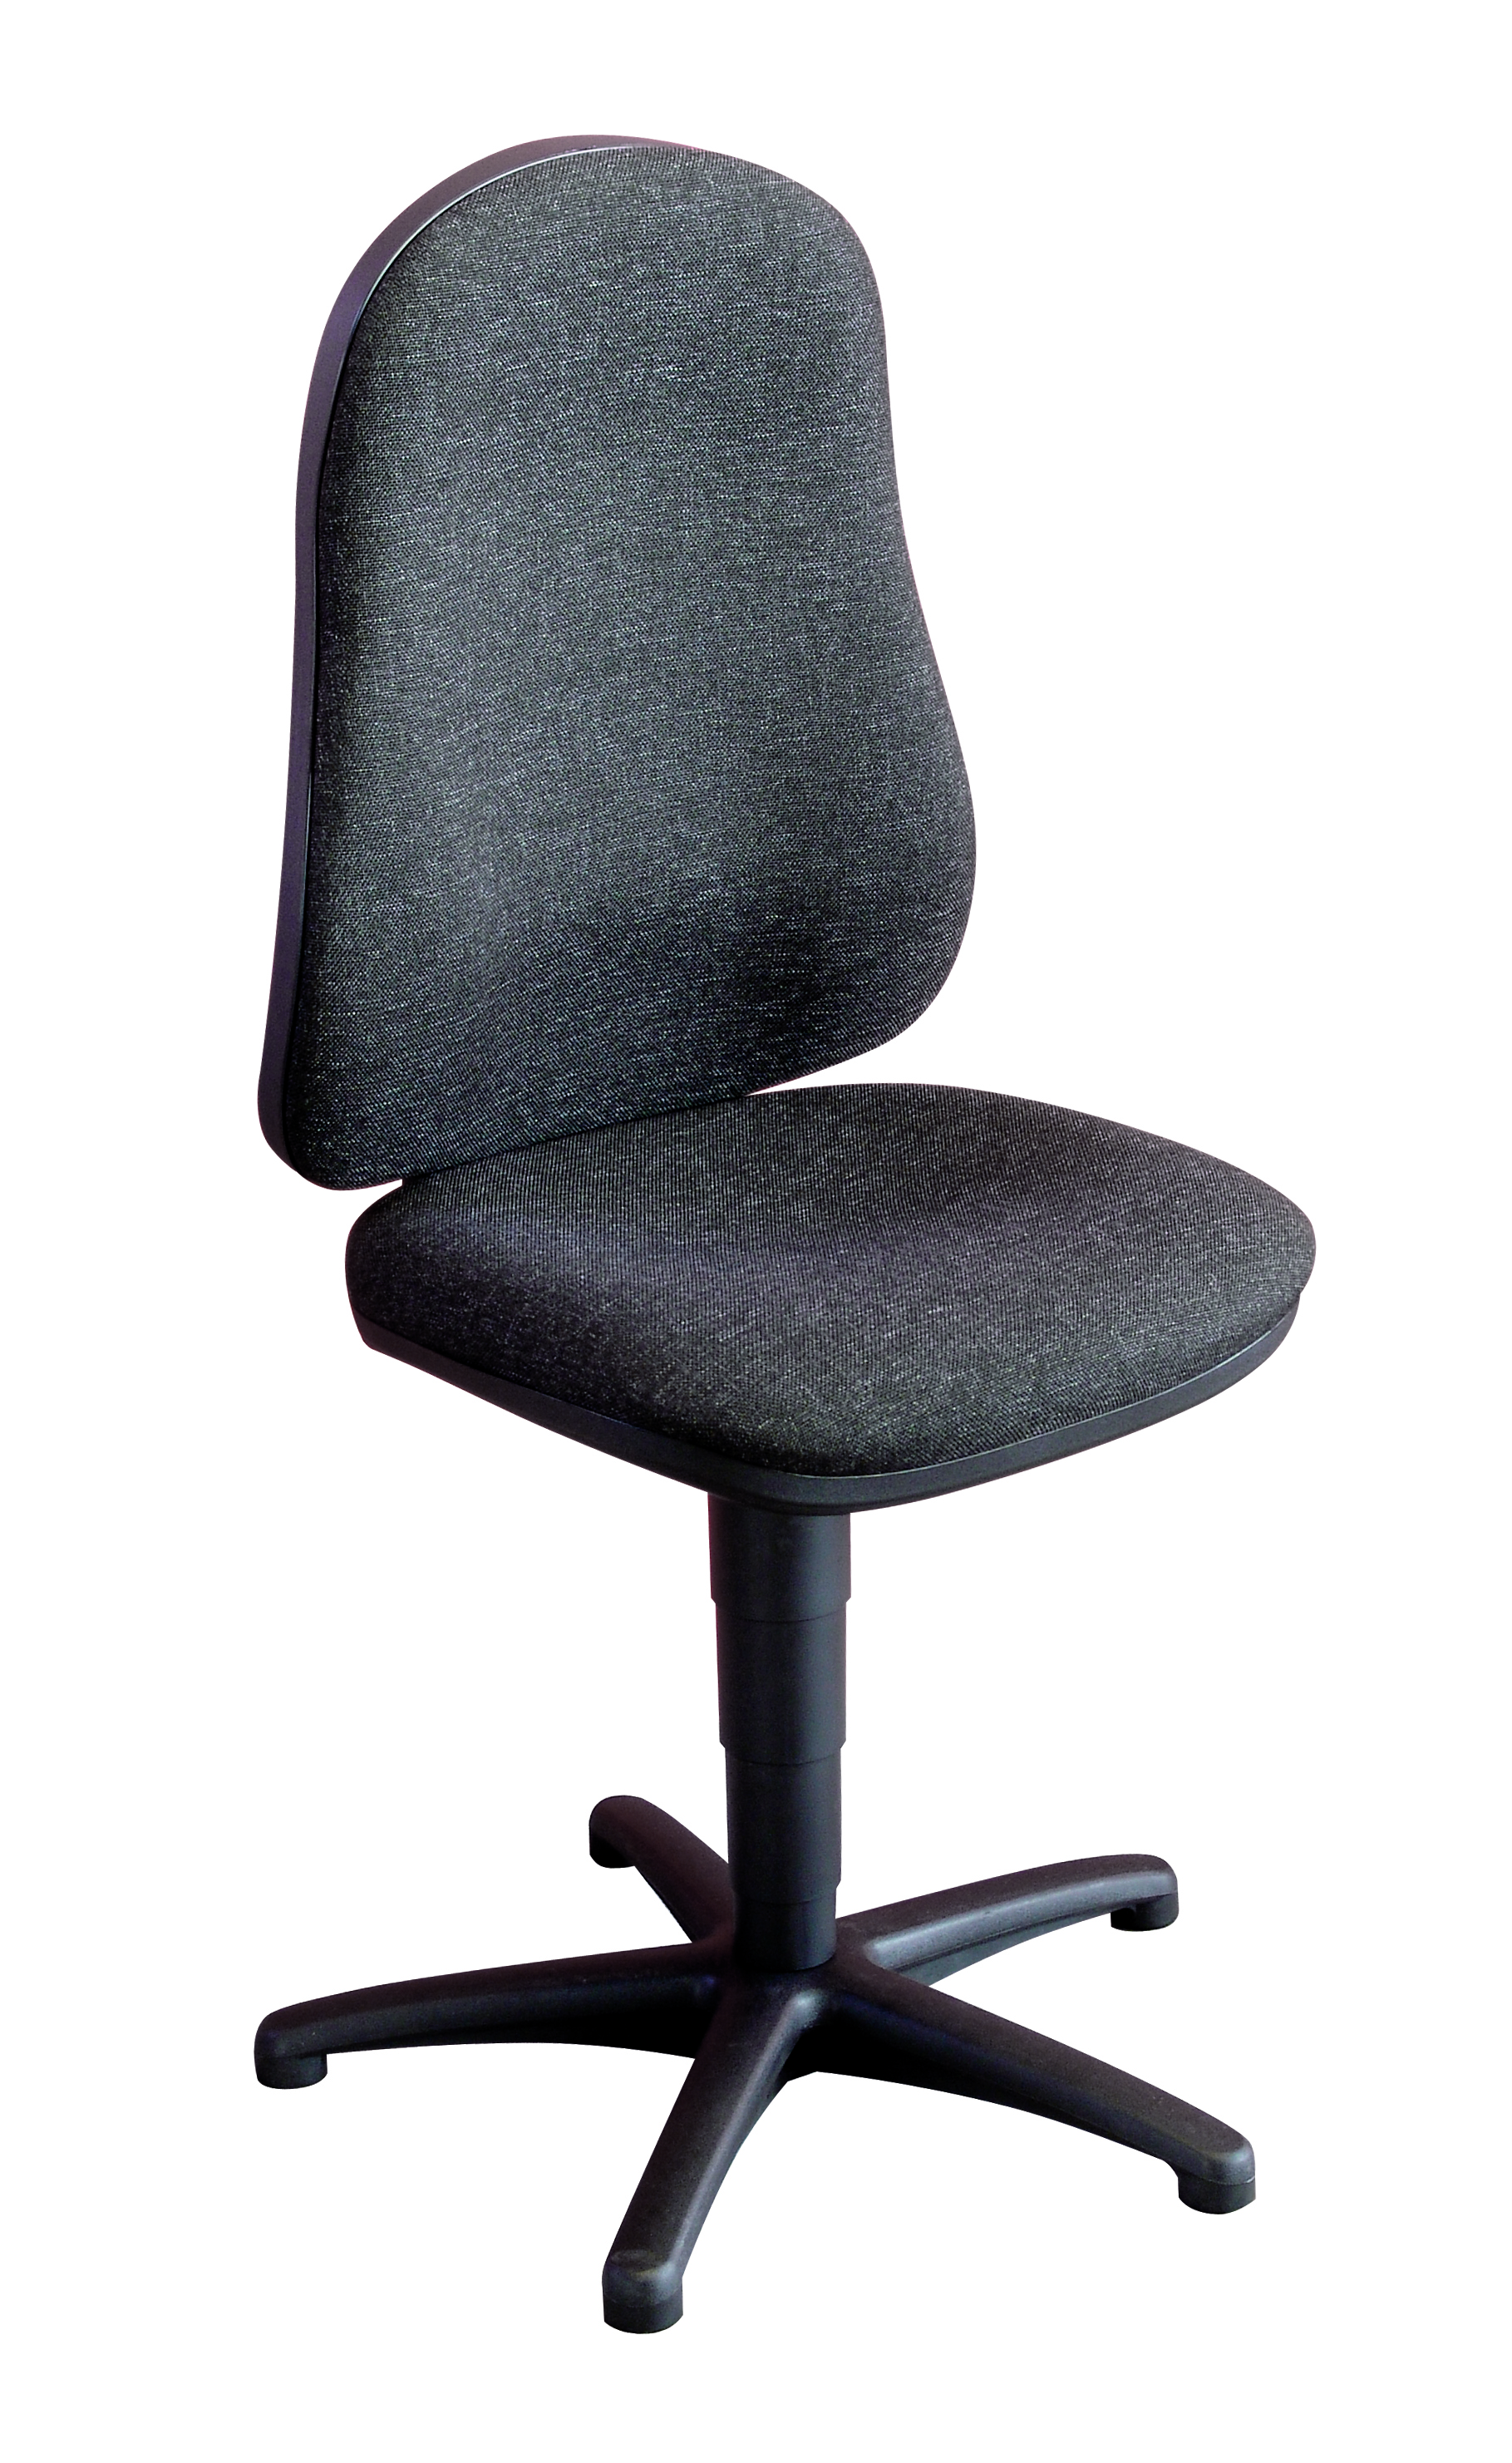 Büro-Drehstuhl / Office-Dreh-Stuhl - zeitlos-klassisch ein Favorit im Büroalltag - mega-reduziert!